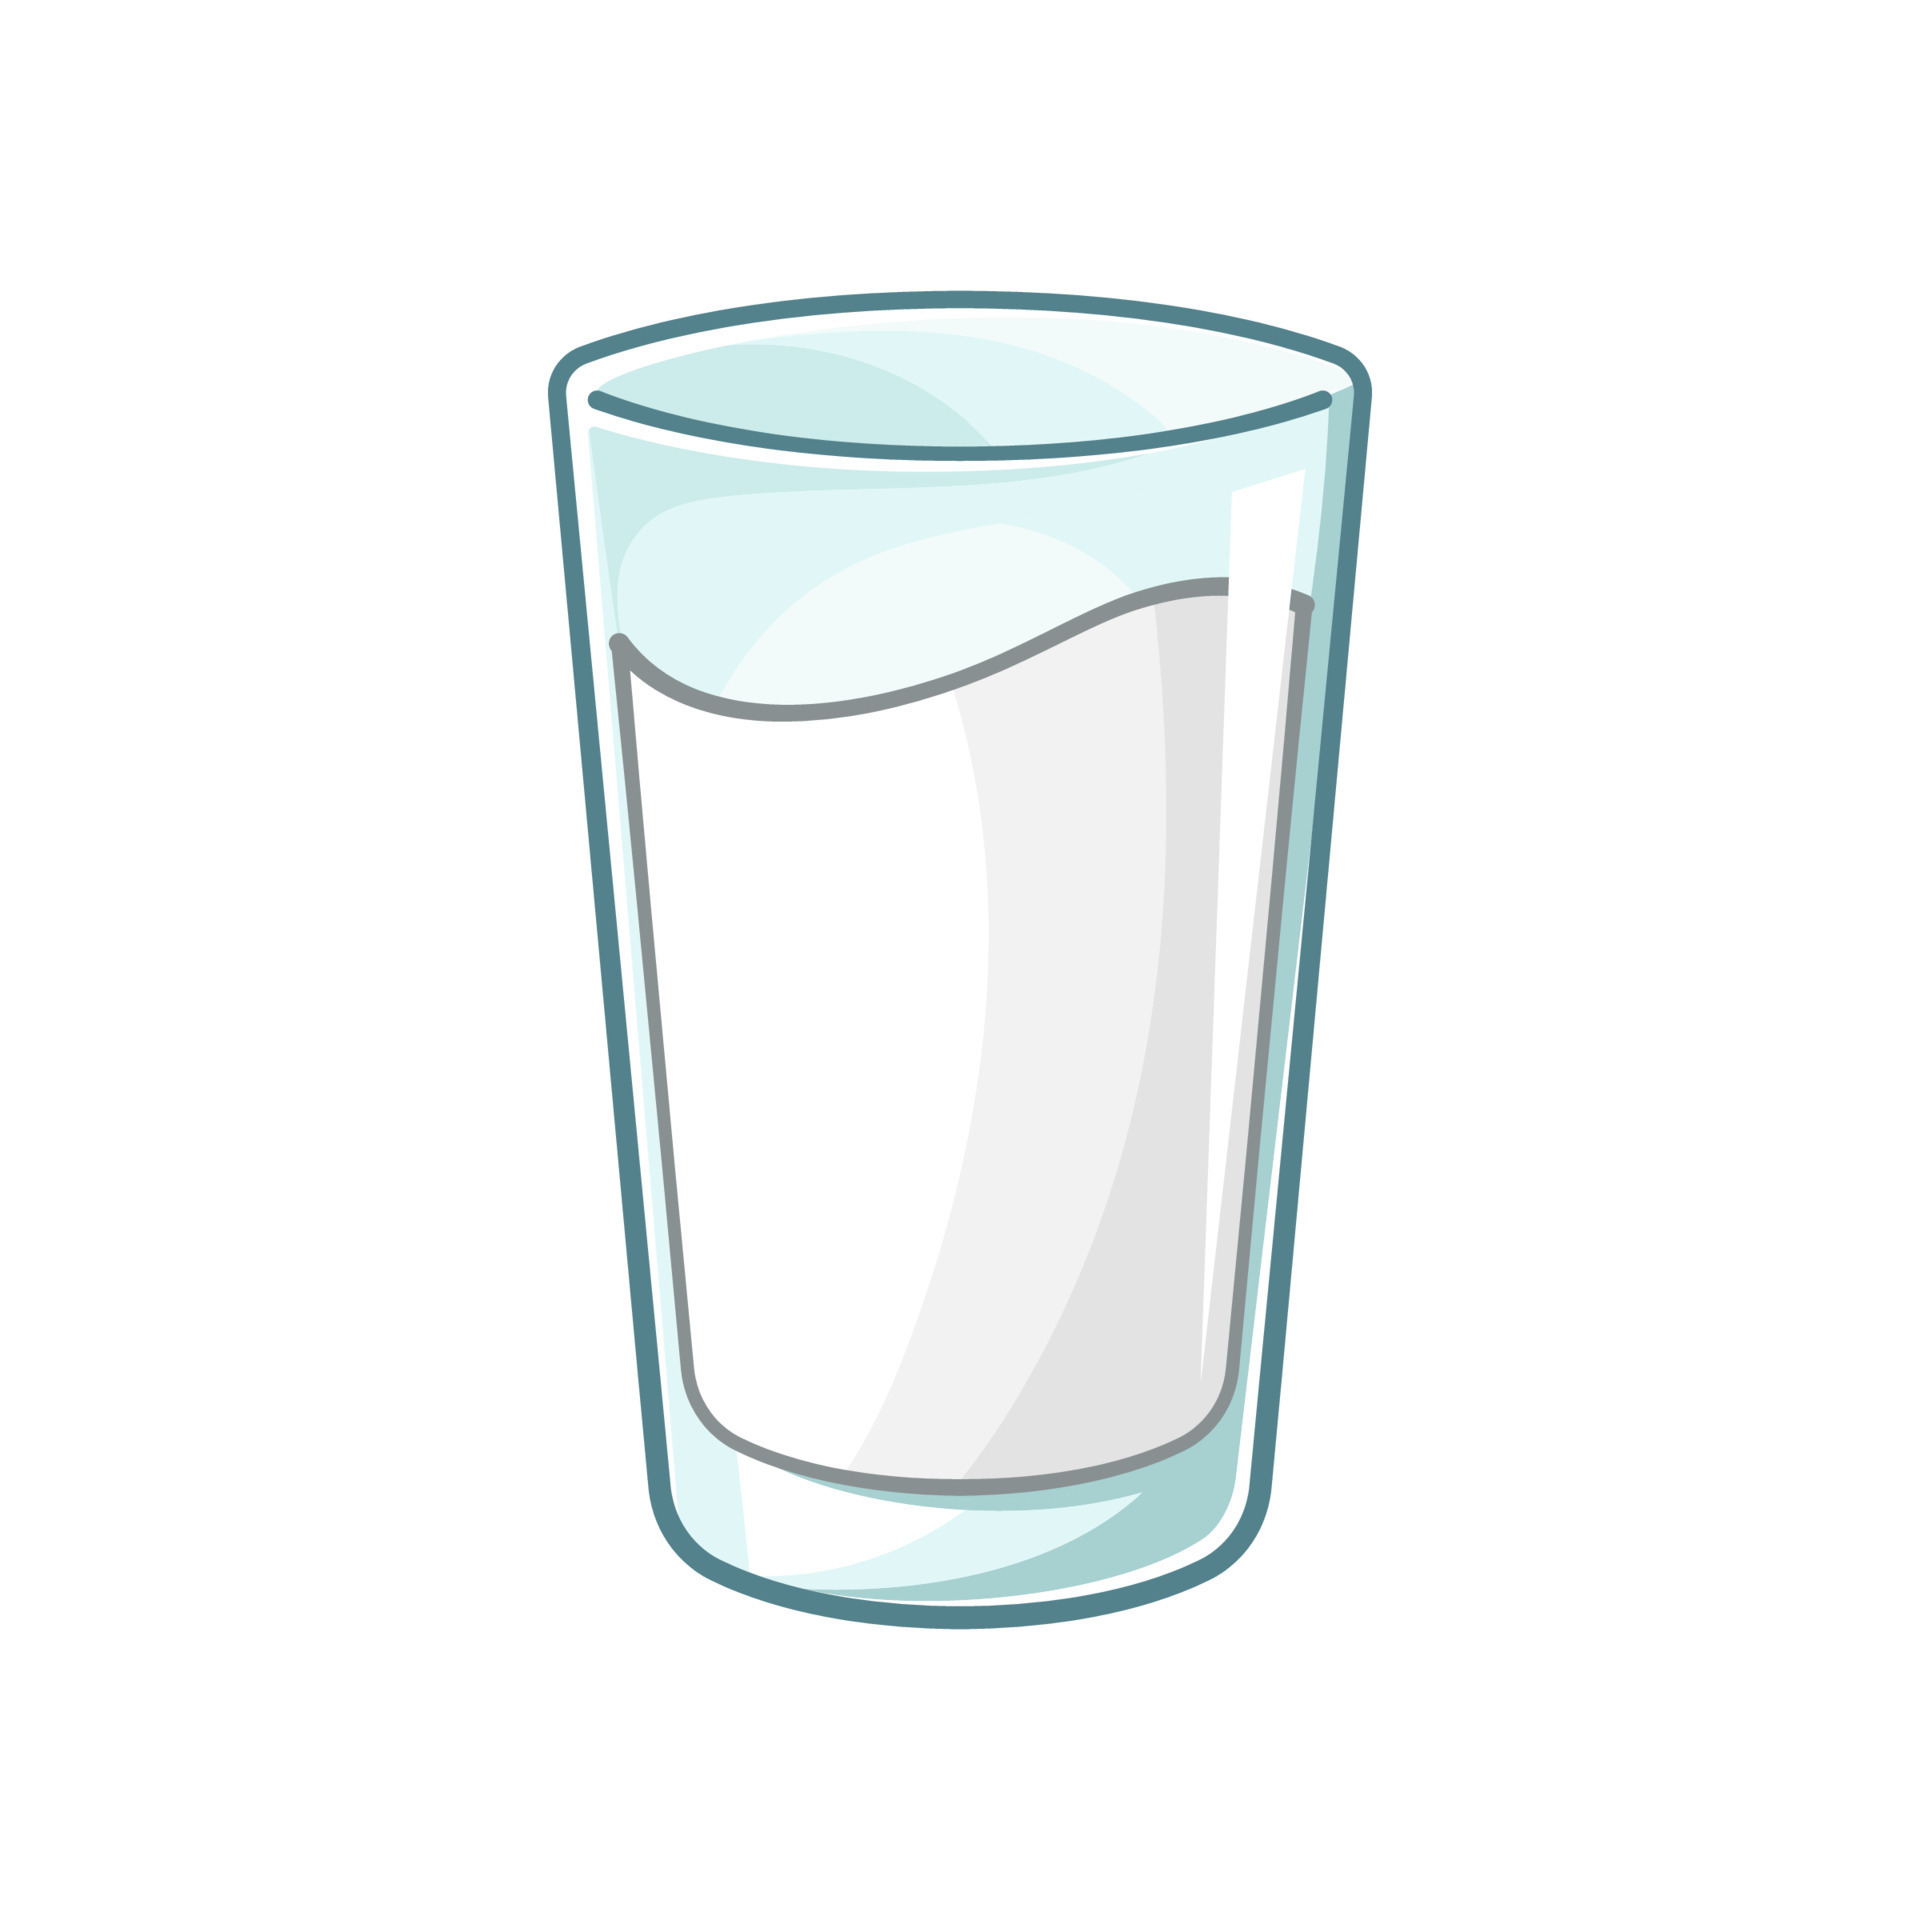 https://static.vecteezy.com/system/resources/previews/016/461/354/original/tall-glass-of-milk-clipart-element-cute-simple-flat-illustration-design-vanilla-milk-flavor-yogurt-dairy-drink-print-sign-symbol-vector.jpg